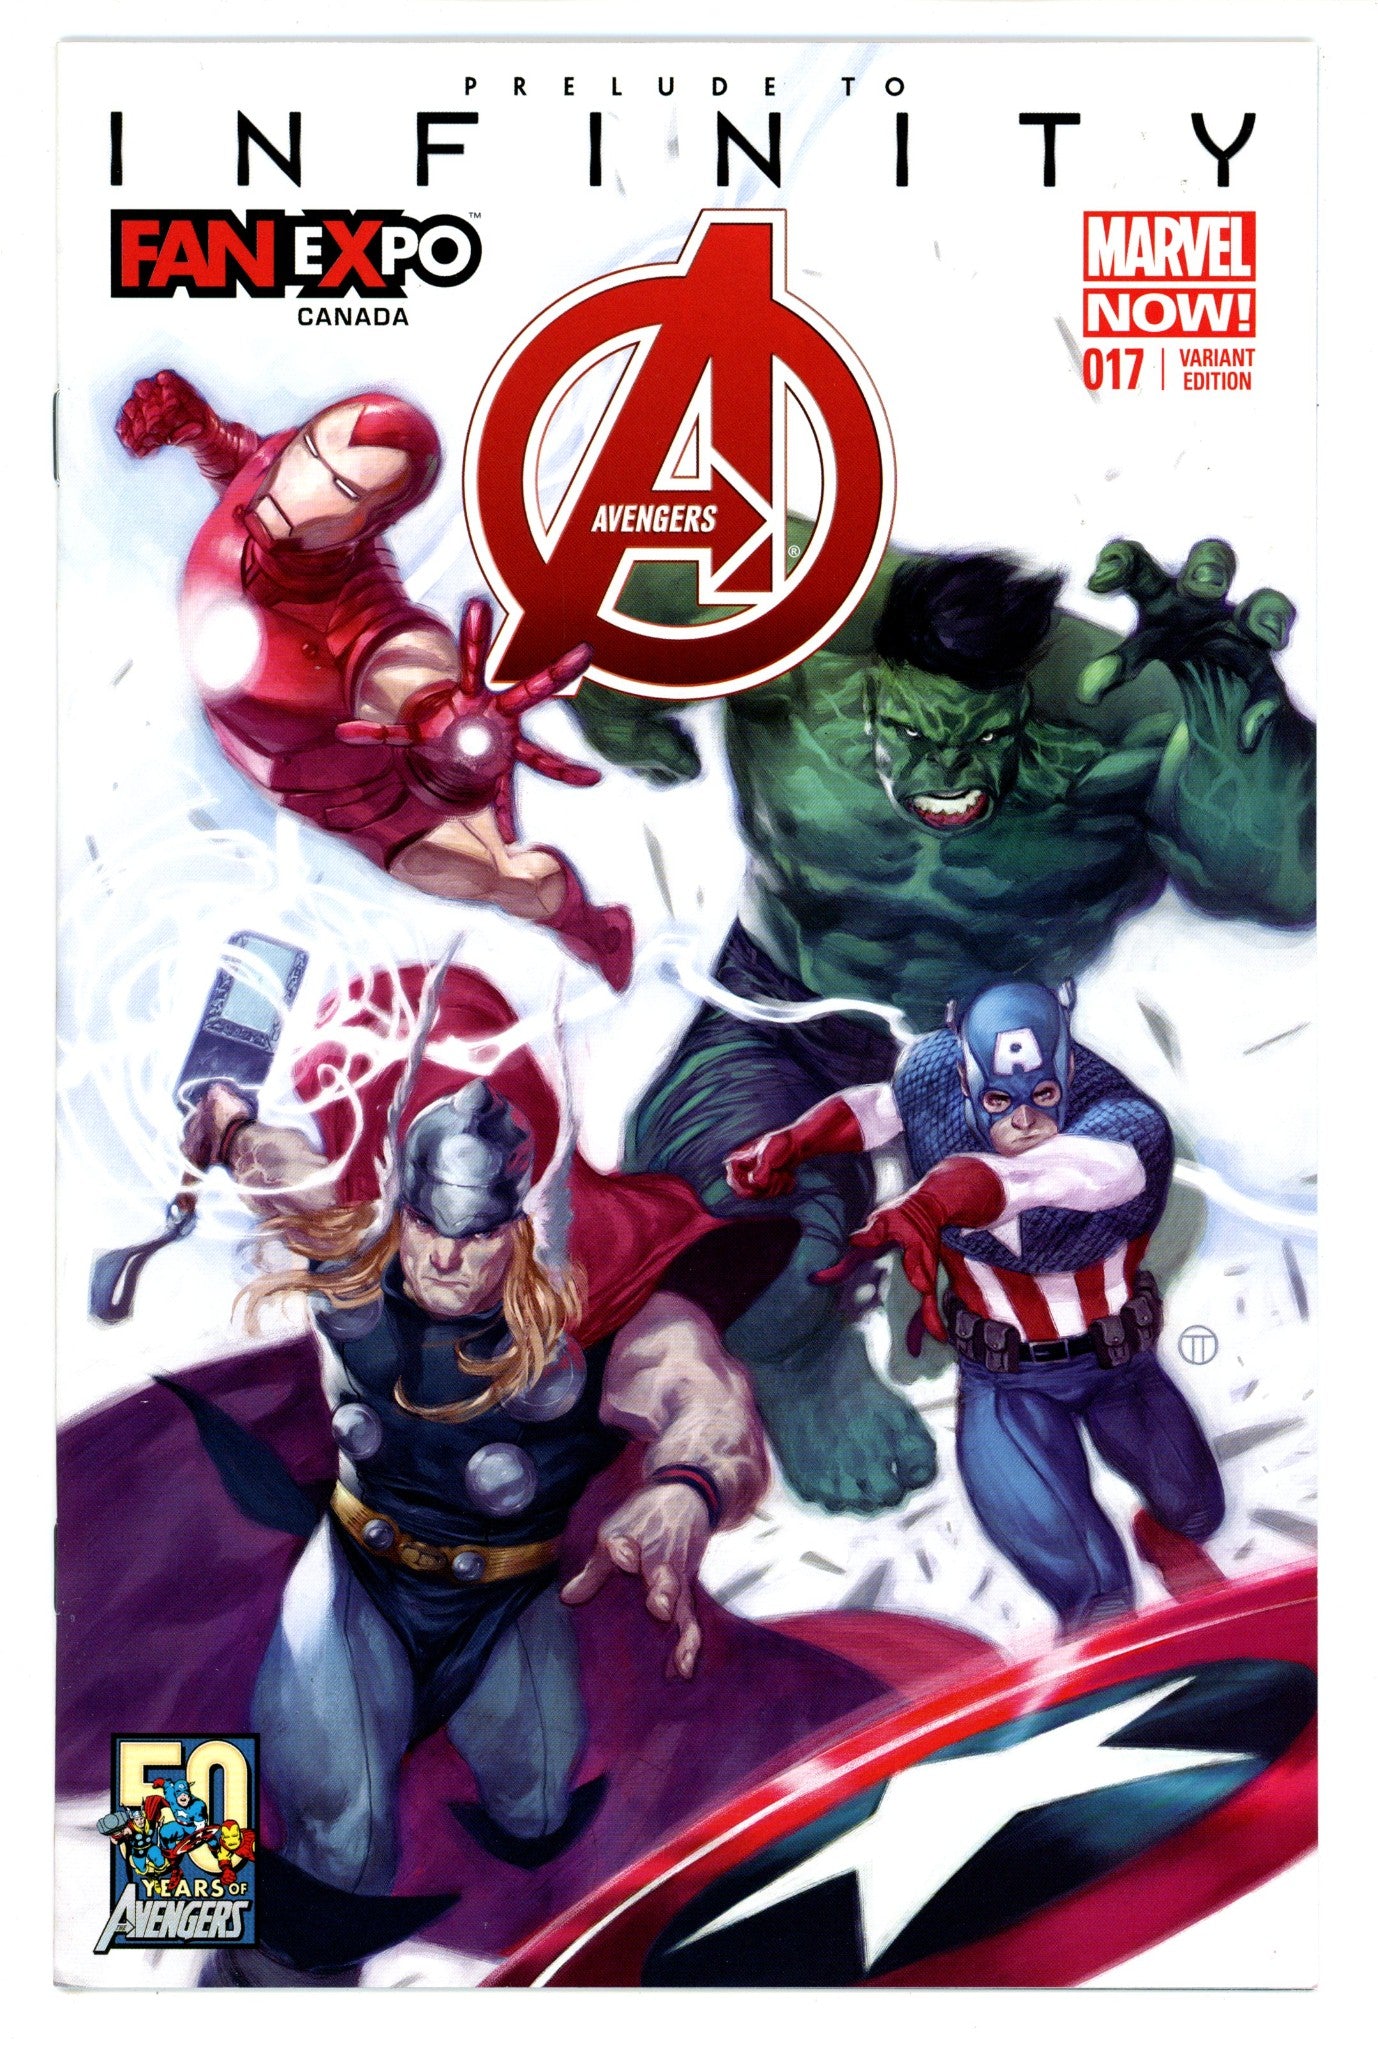 Avengers Vol 5 17 NM (9.4) (2013) Tedesco Exclusive Variant 